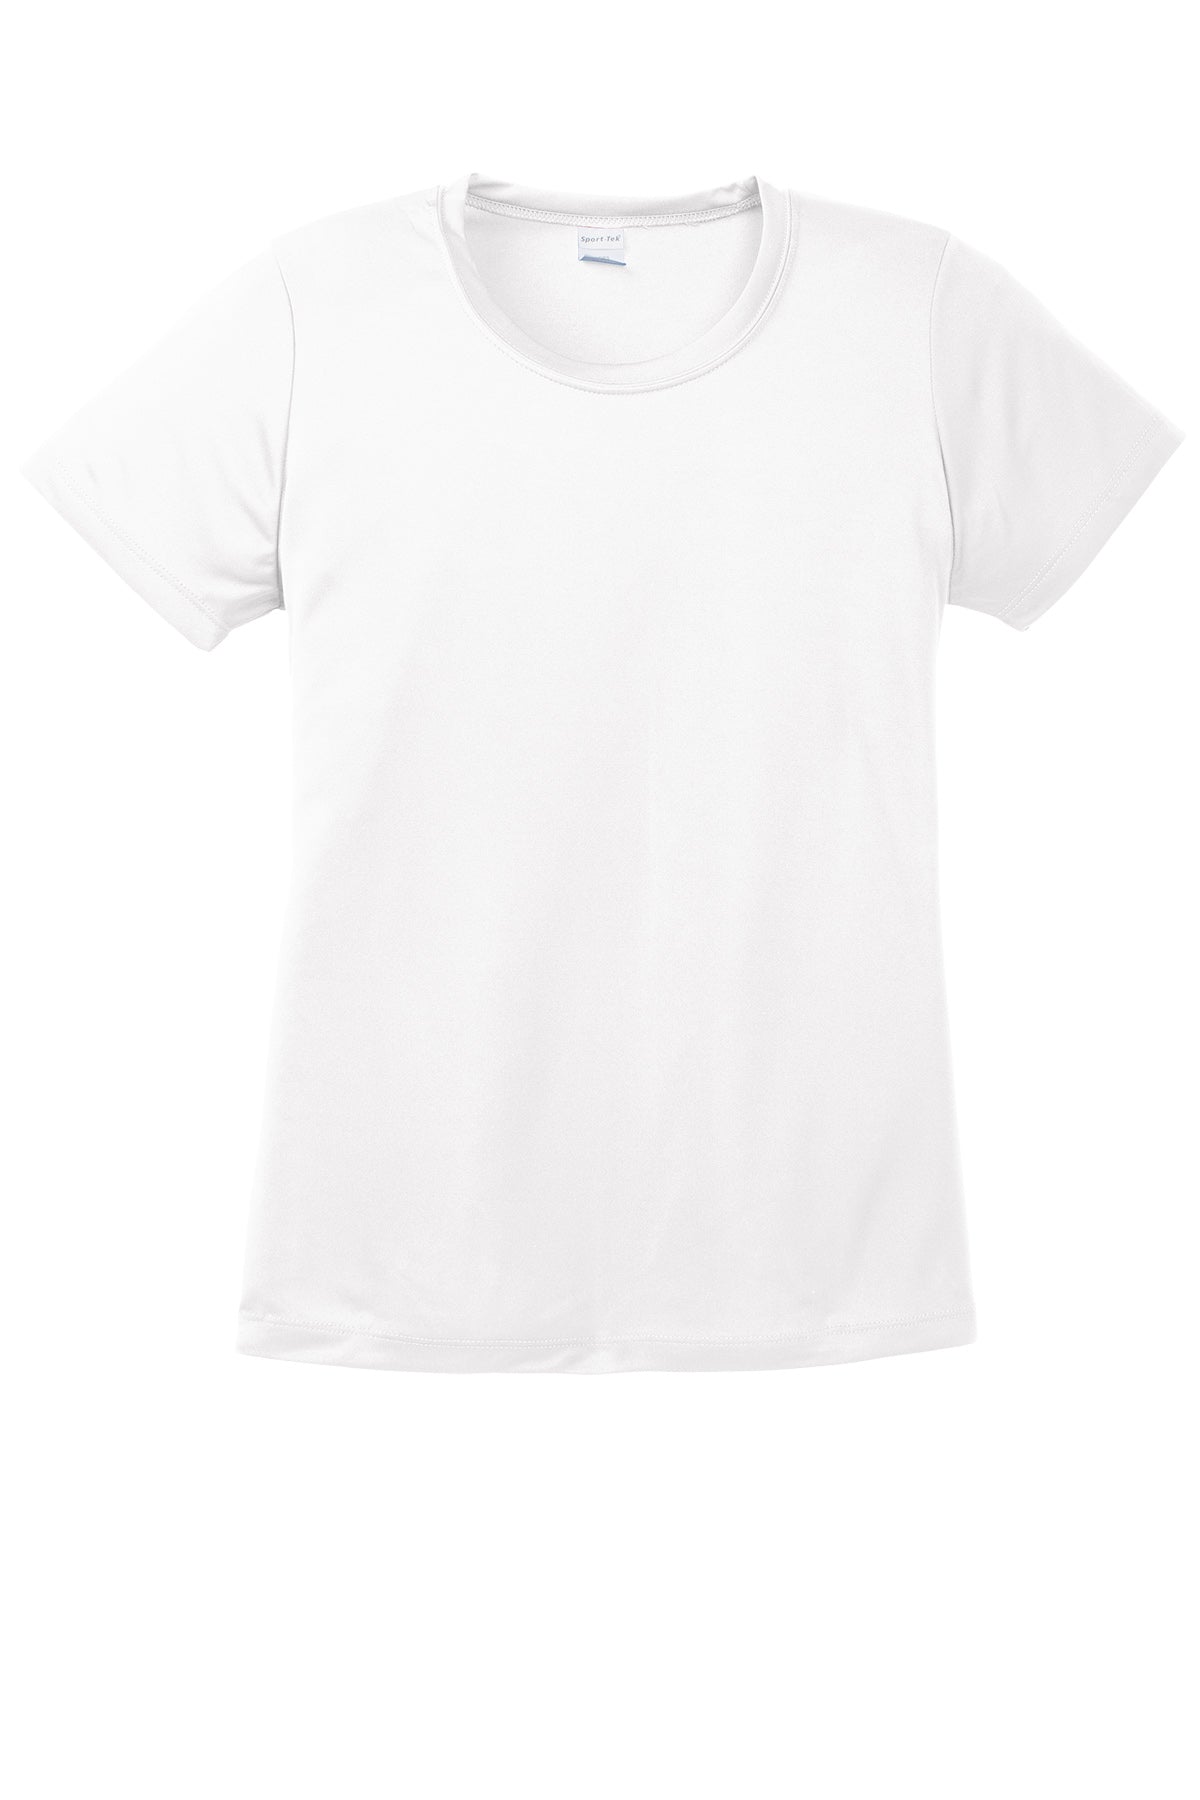 Sport-Tek Lst350 Polyester Ladies T-Shirt Ad Small / White